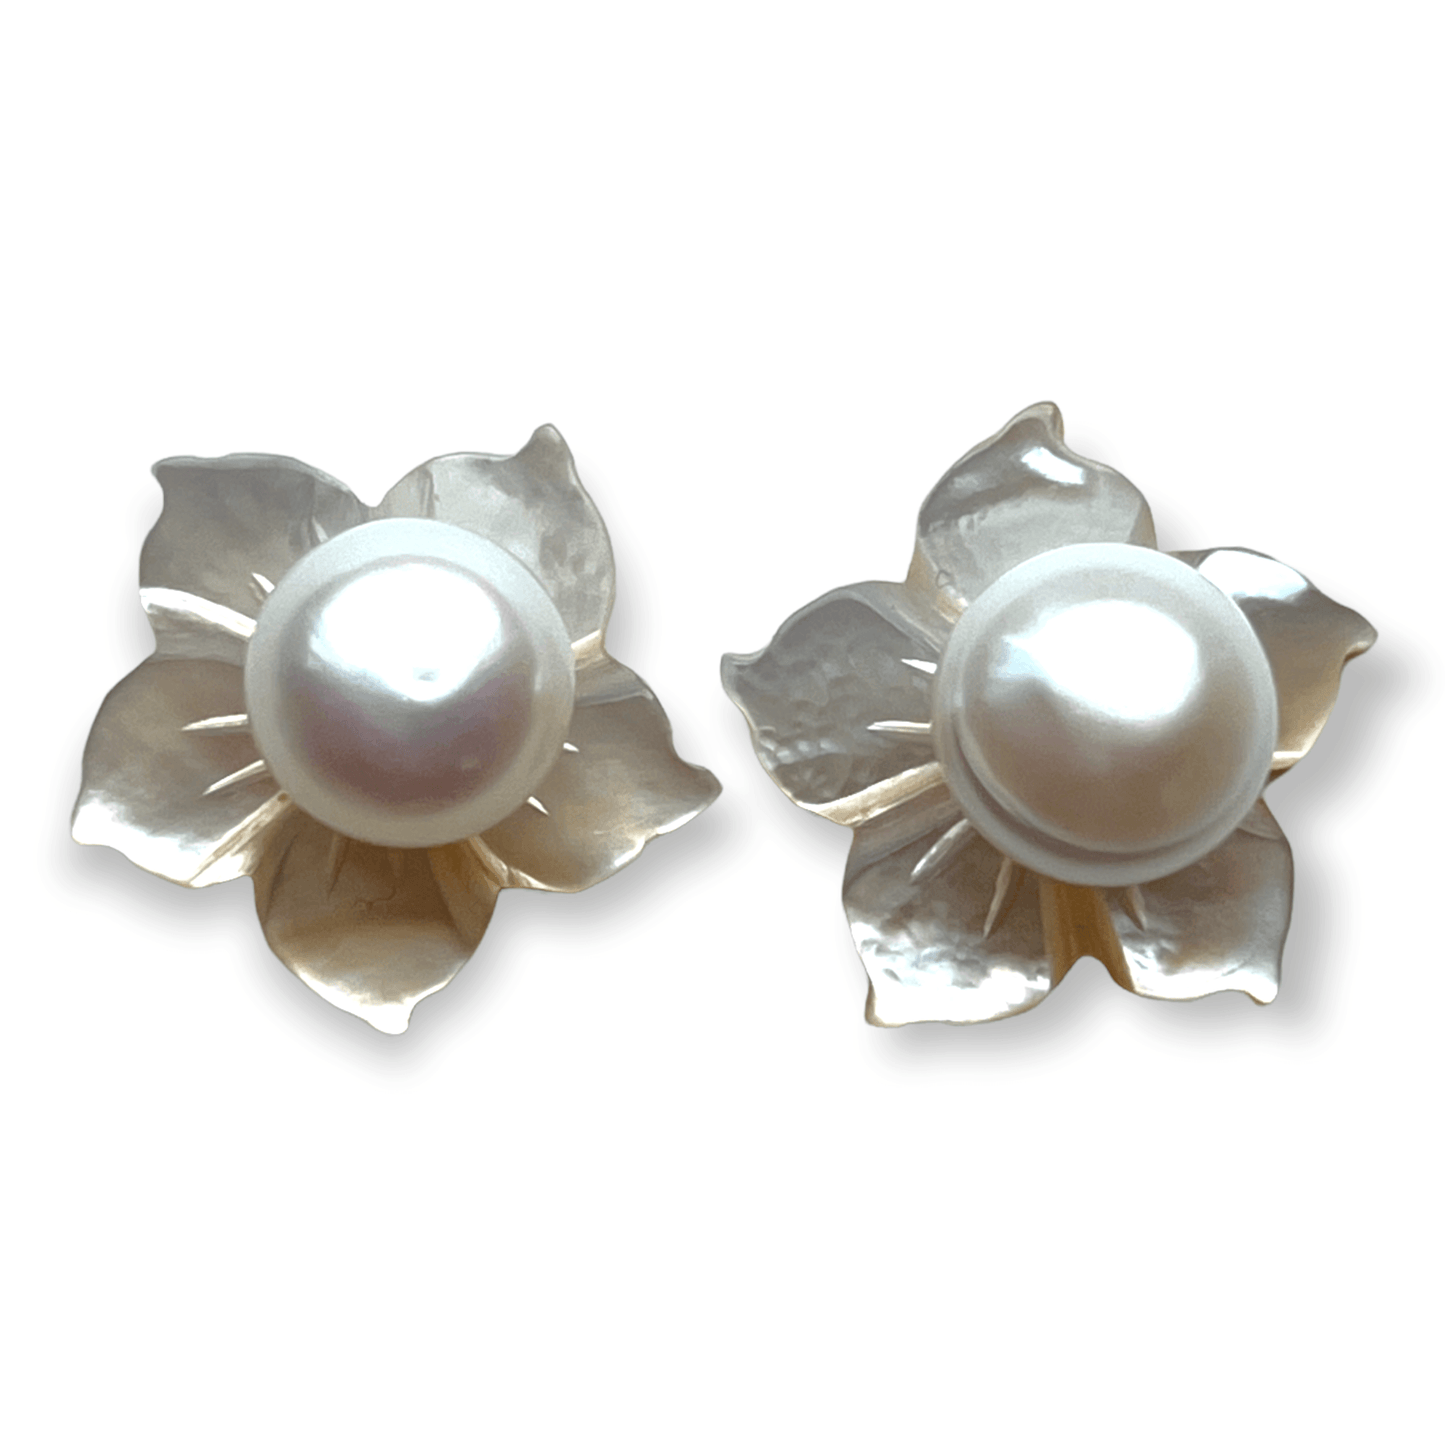 Pearl stud earrings with a floral design option - Sundara Joon